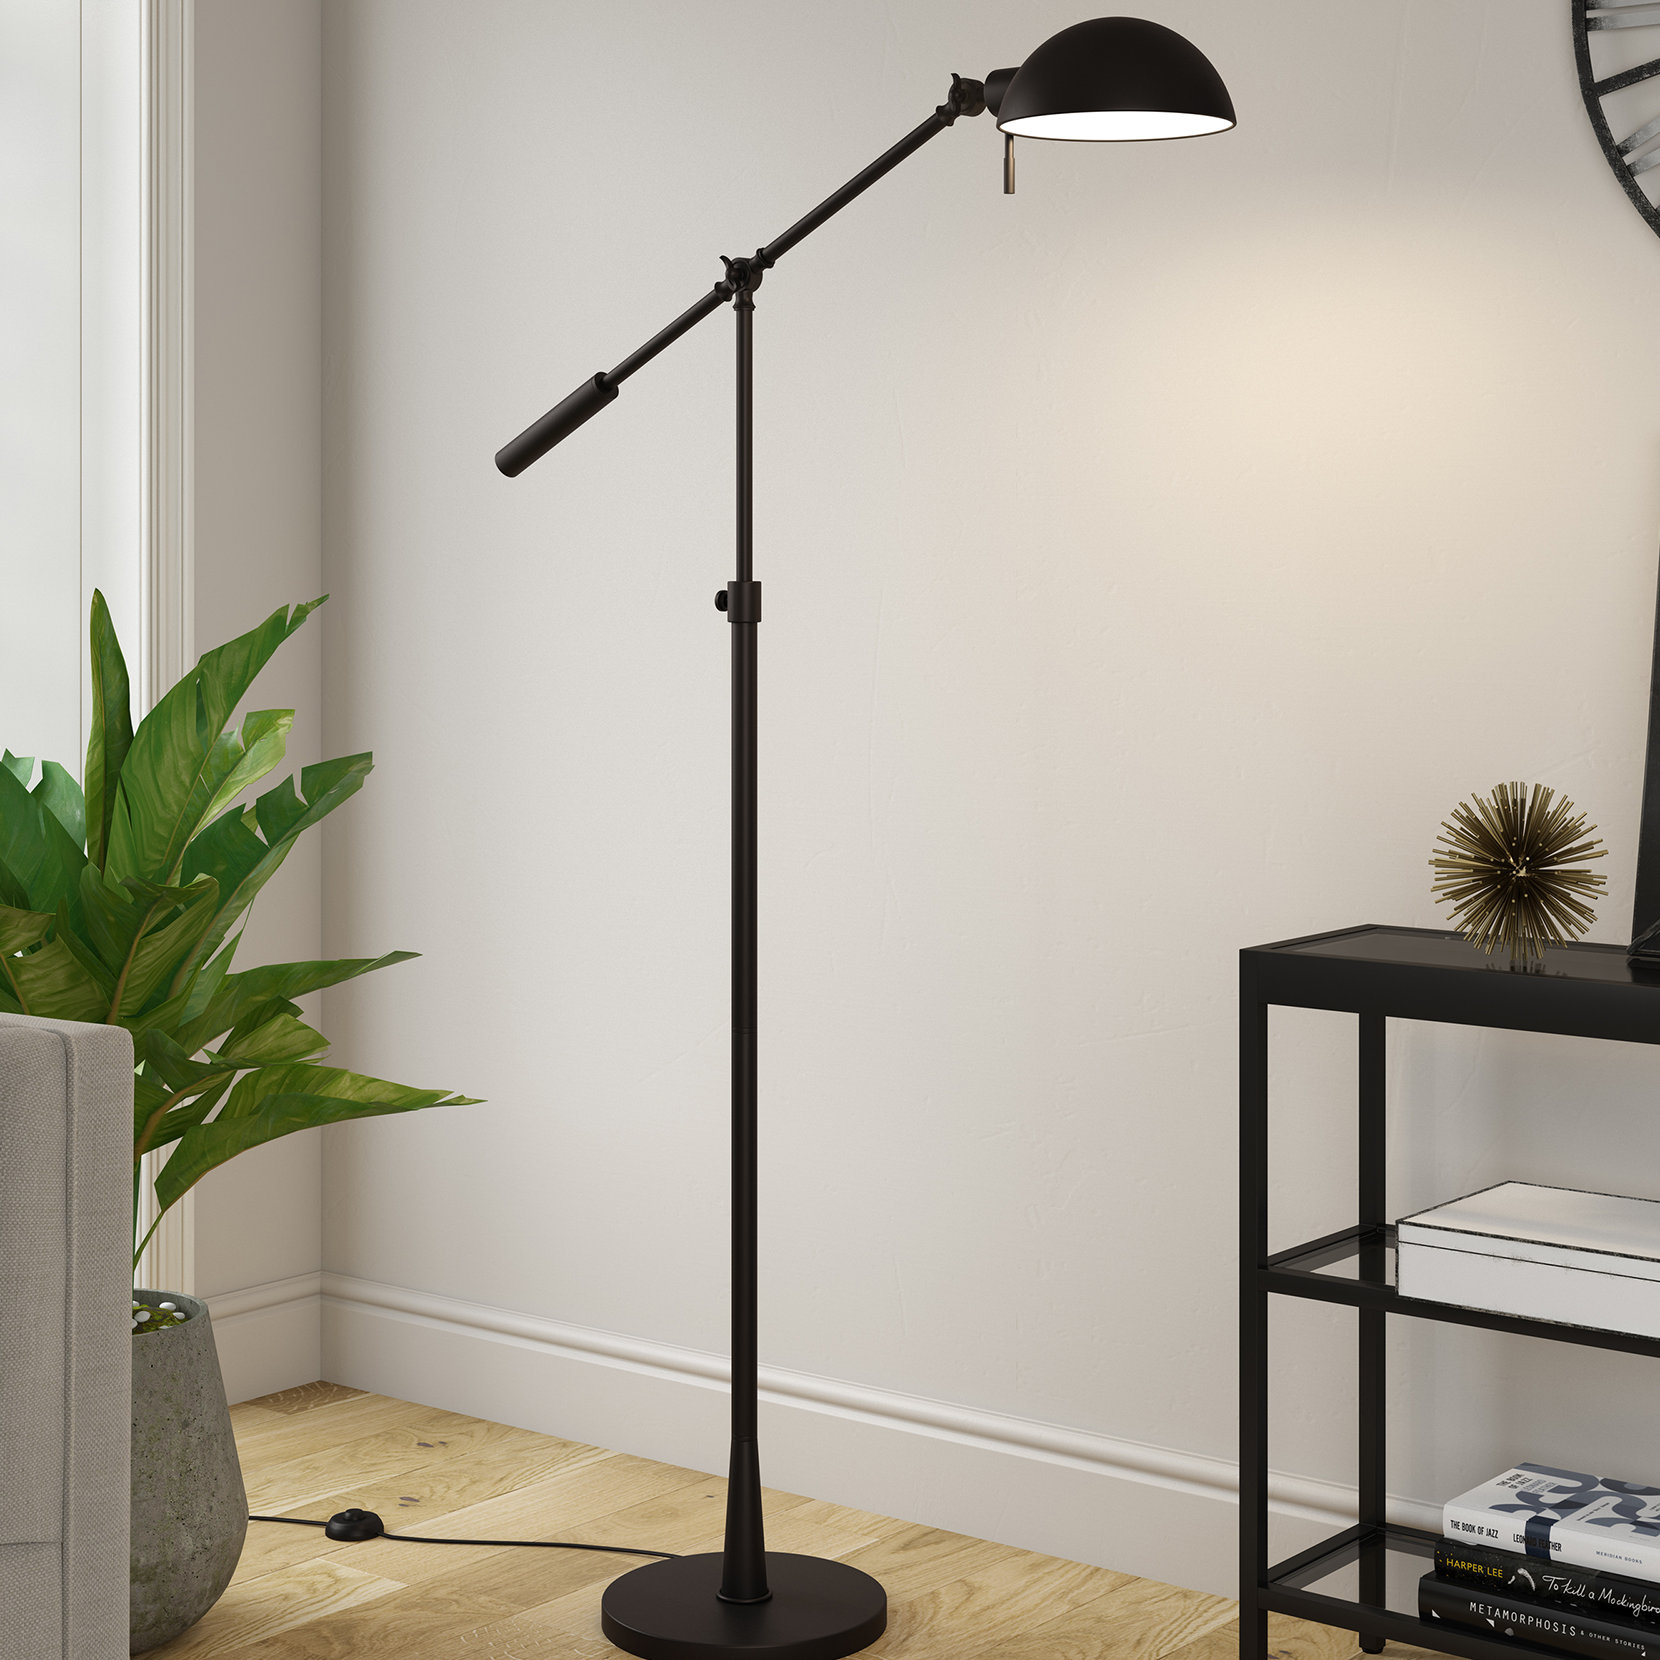 Wayfair | Traditional Floor Lamps You'll Love in 2022